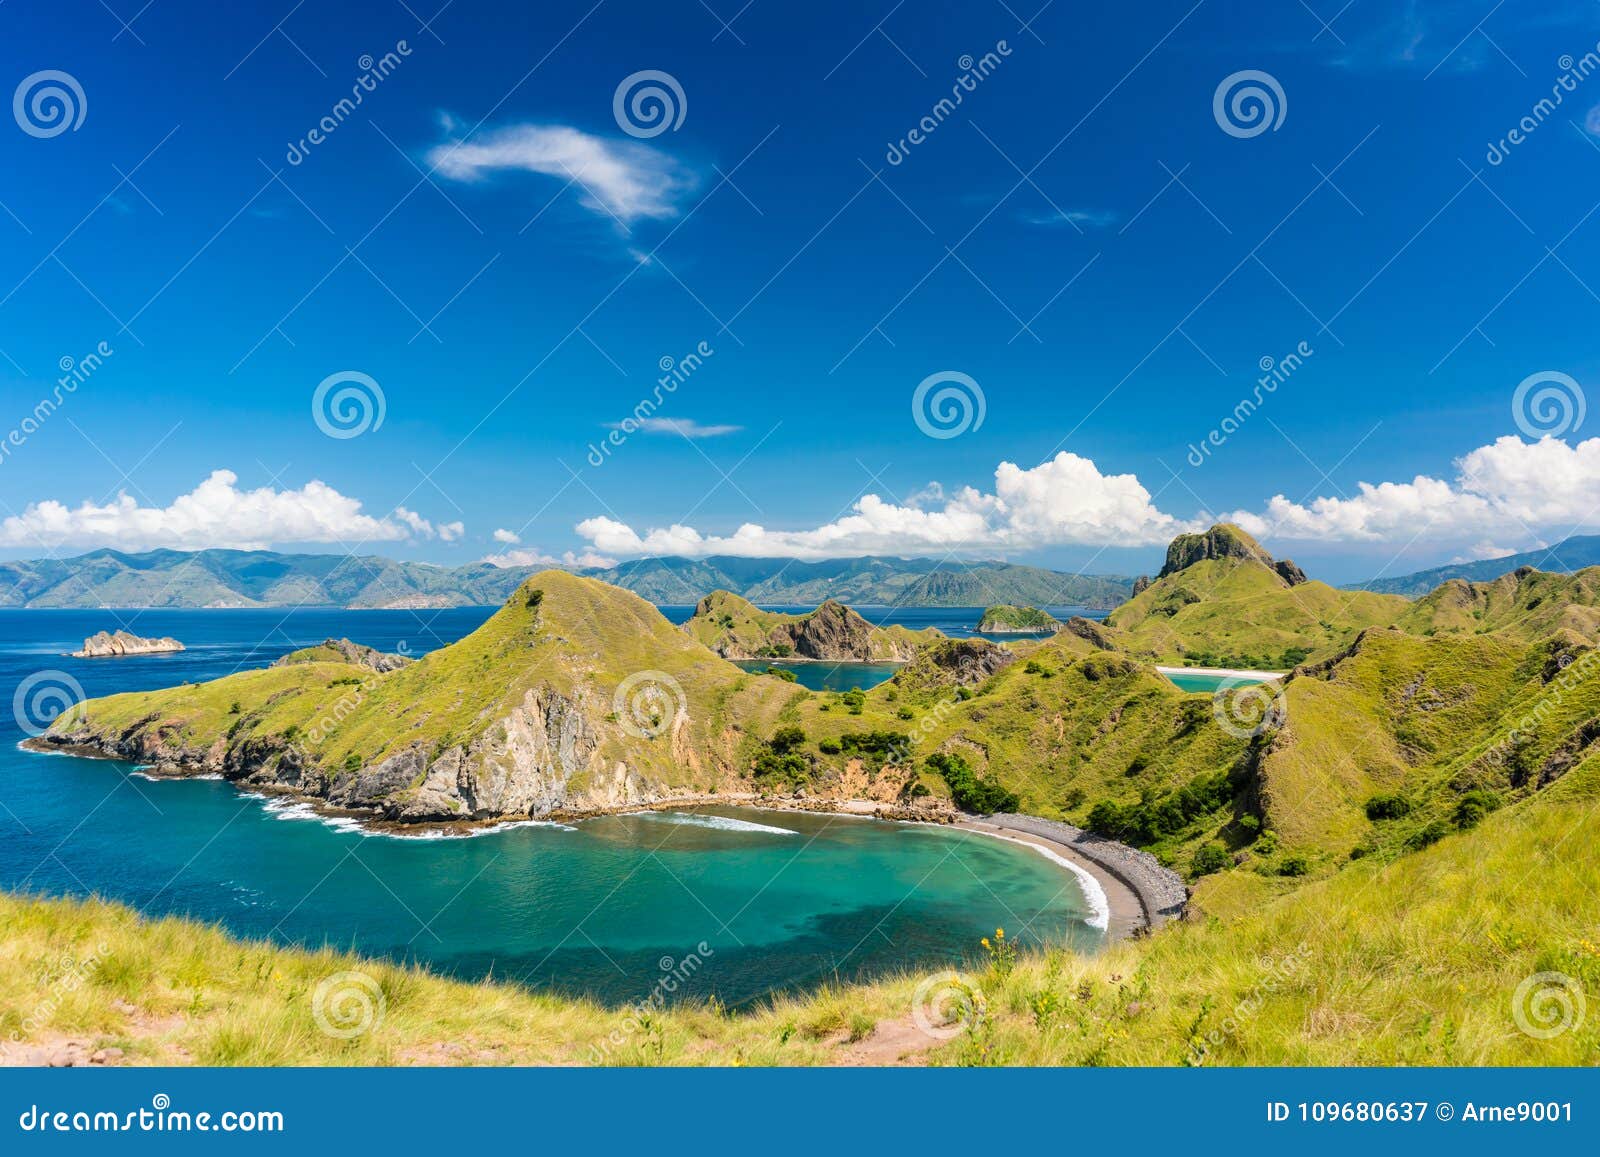 idyllic seascape from indonesia with the coastline of padar isla